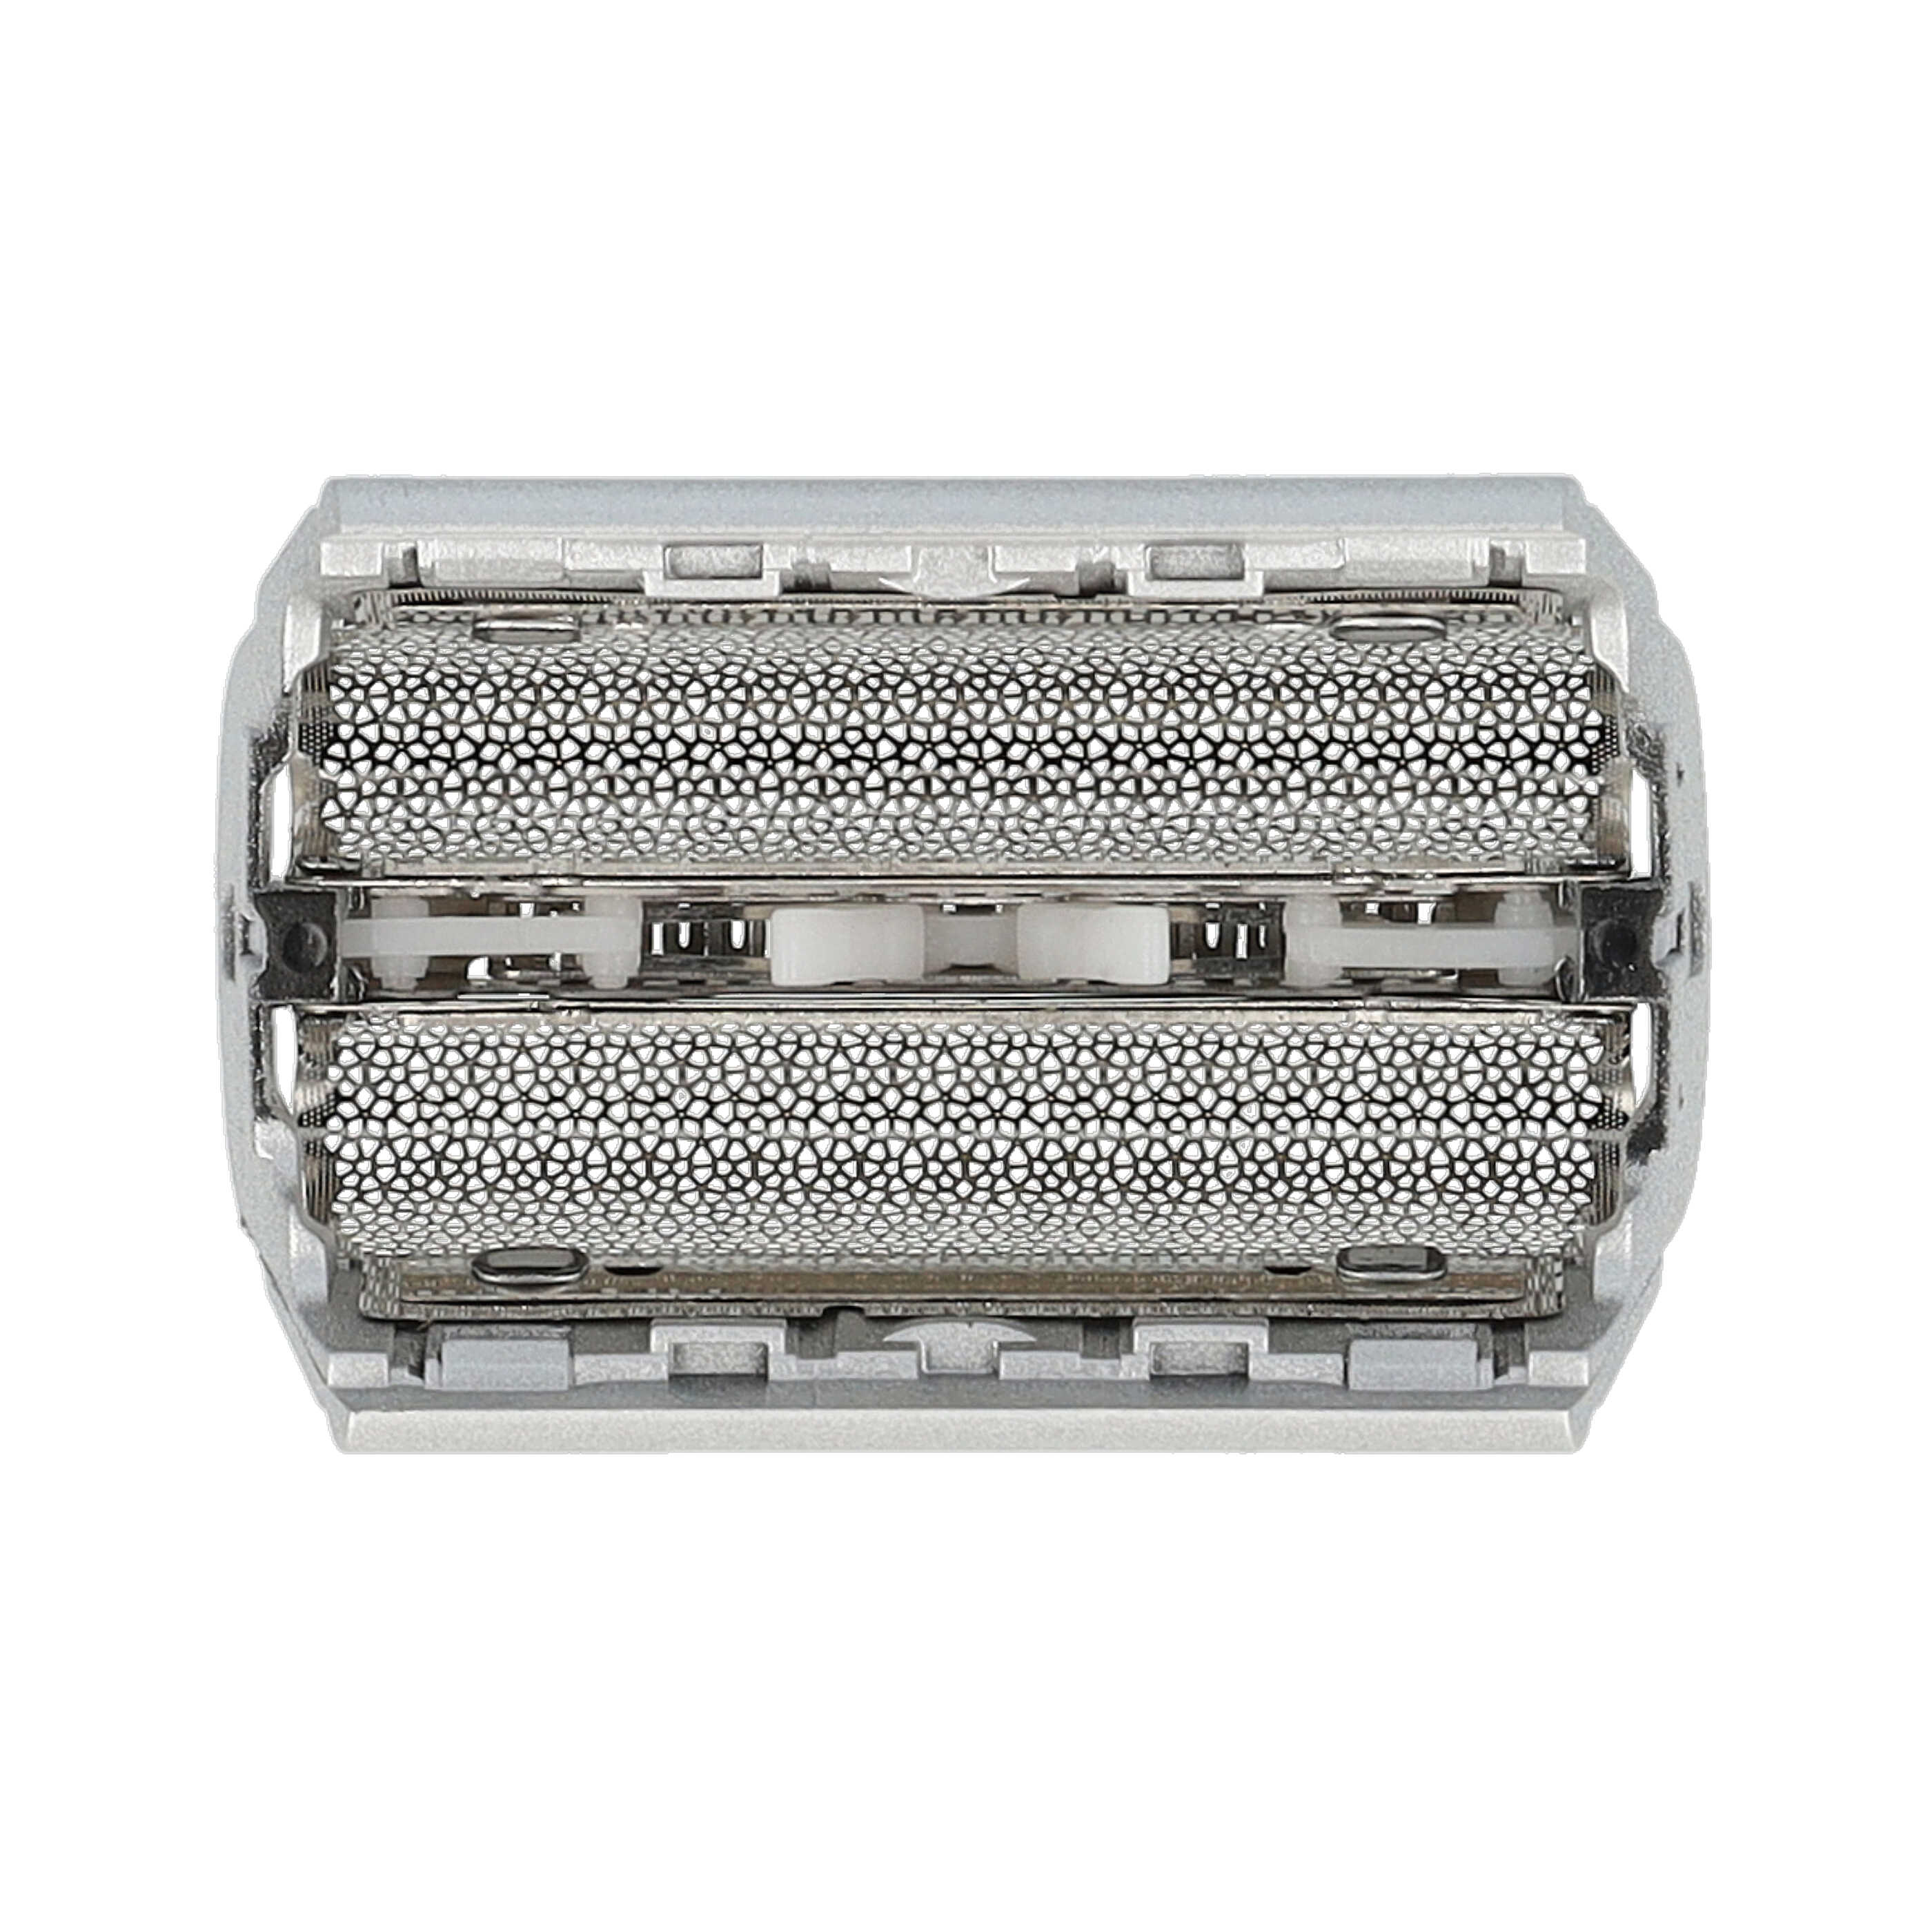 2x Combi Pack lamine sostituisce Braun SB505, 31B, 31S per rasoio Braun - lamina + blocco lame, nero/argento